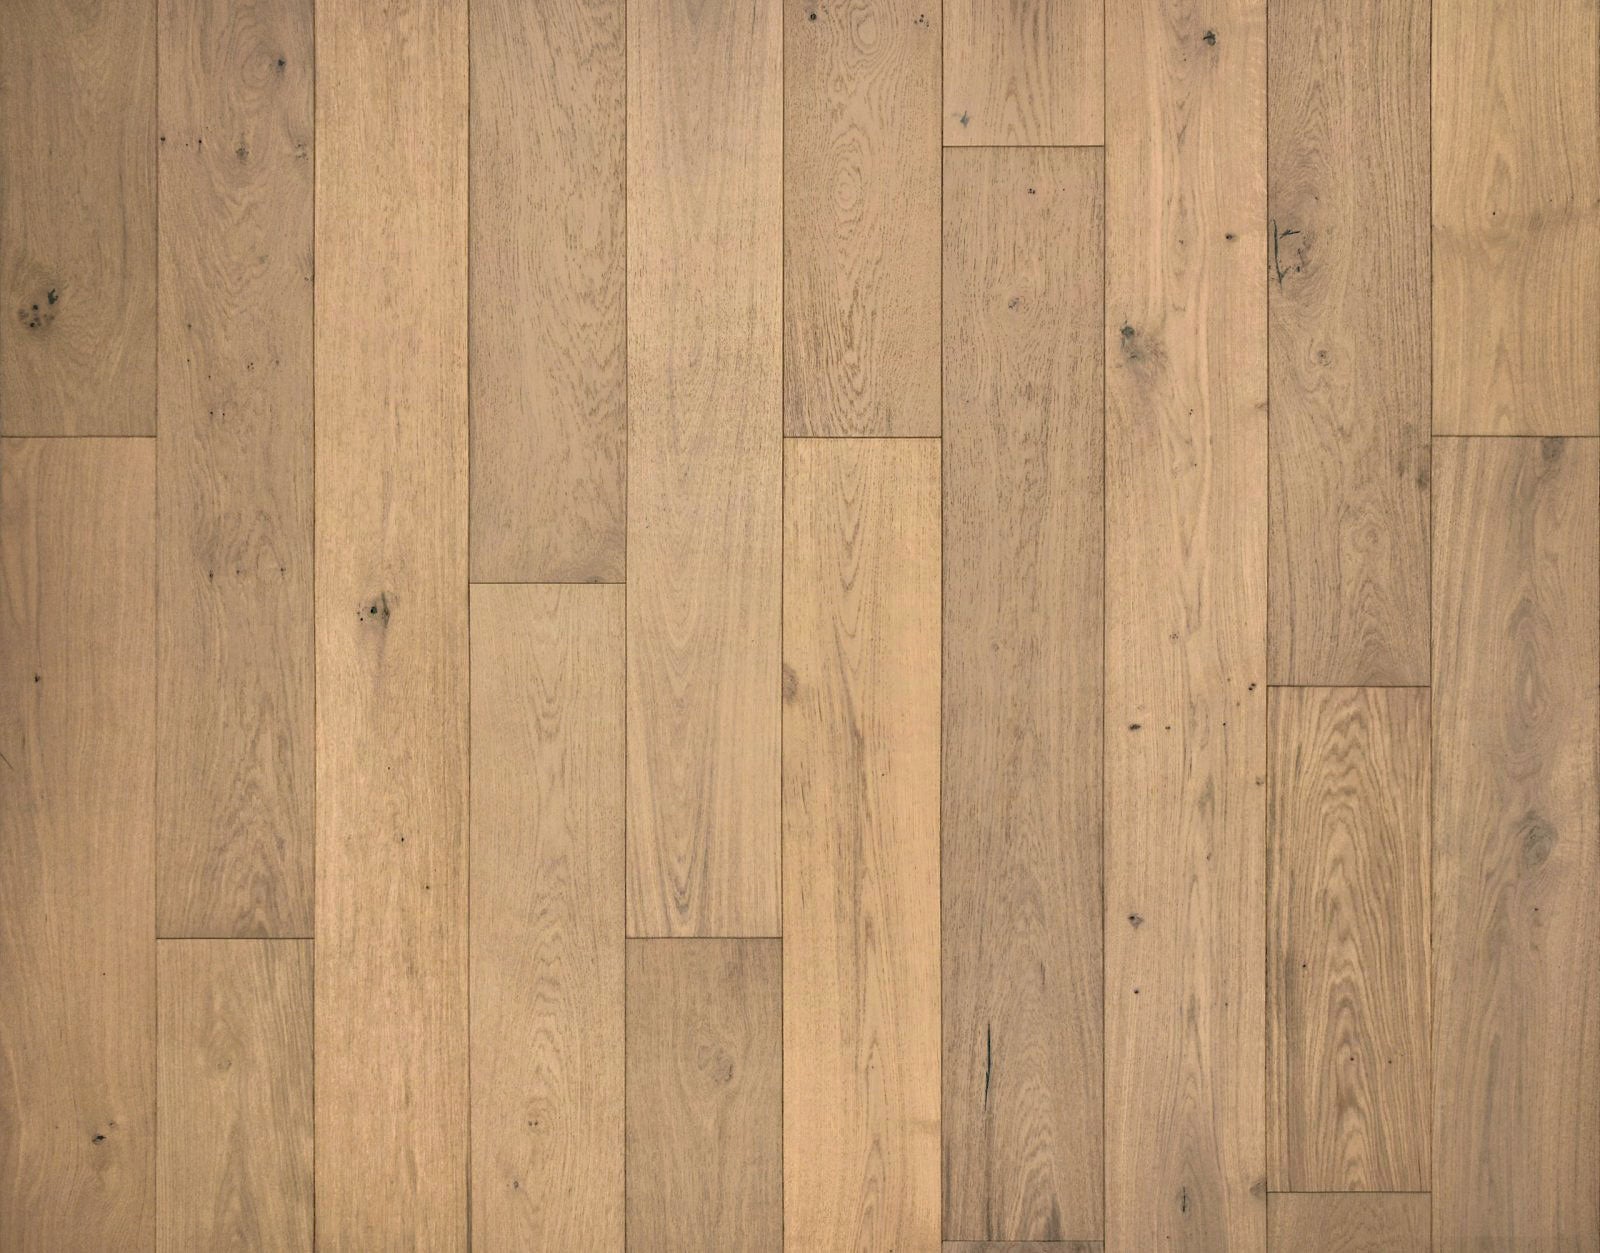 Blog about Hardwood Flooring